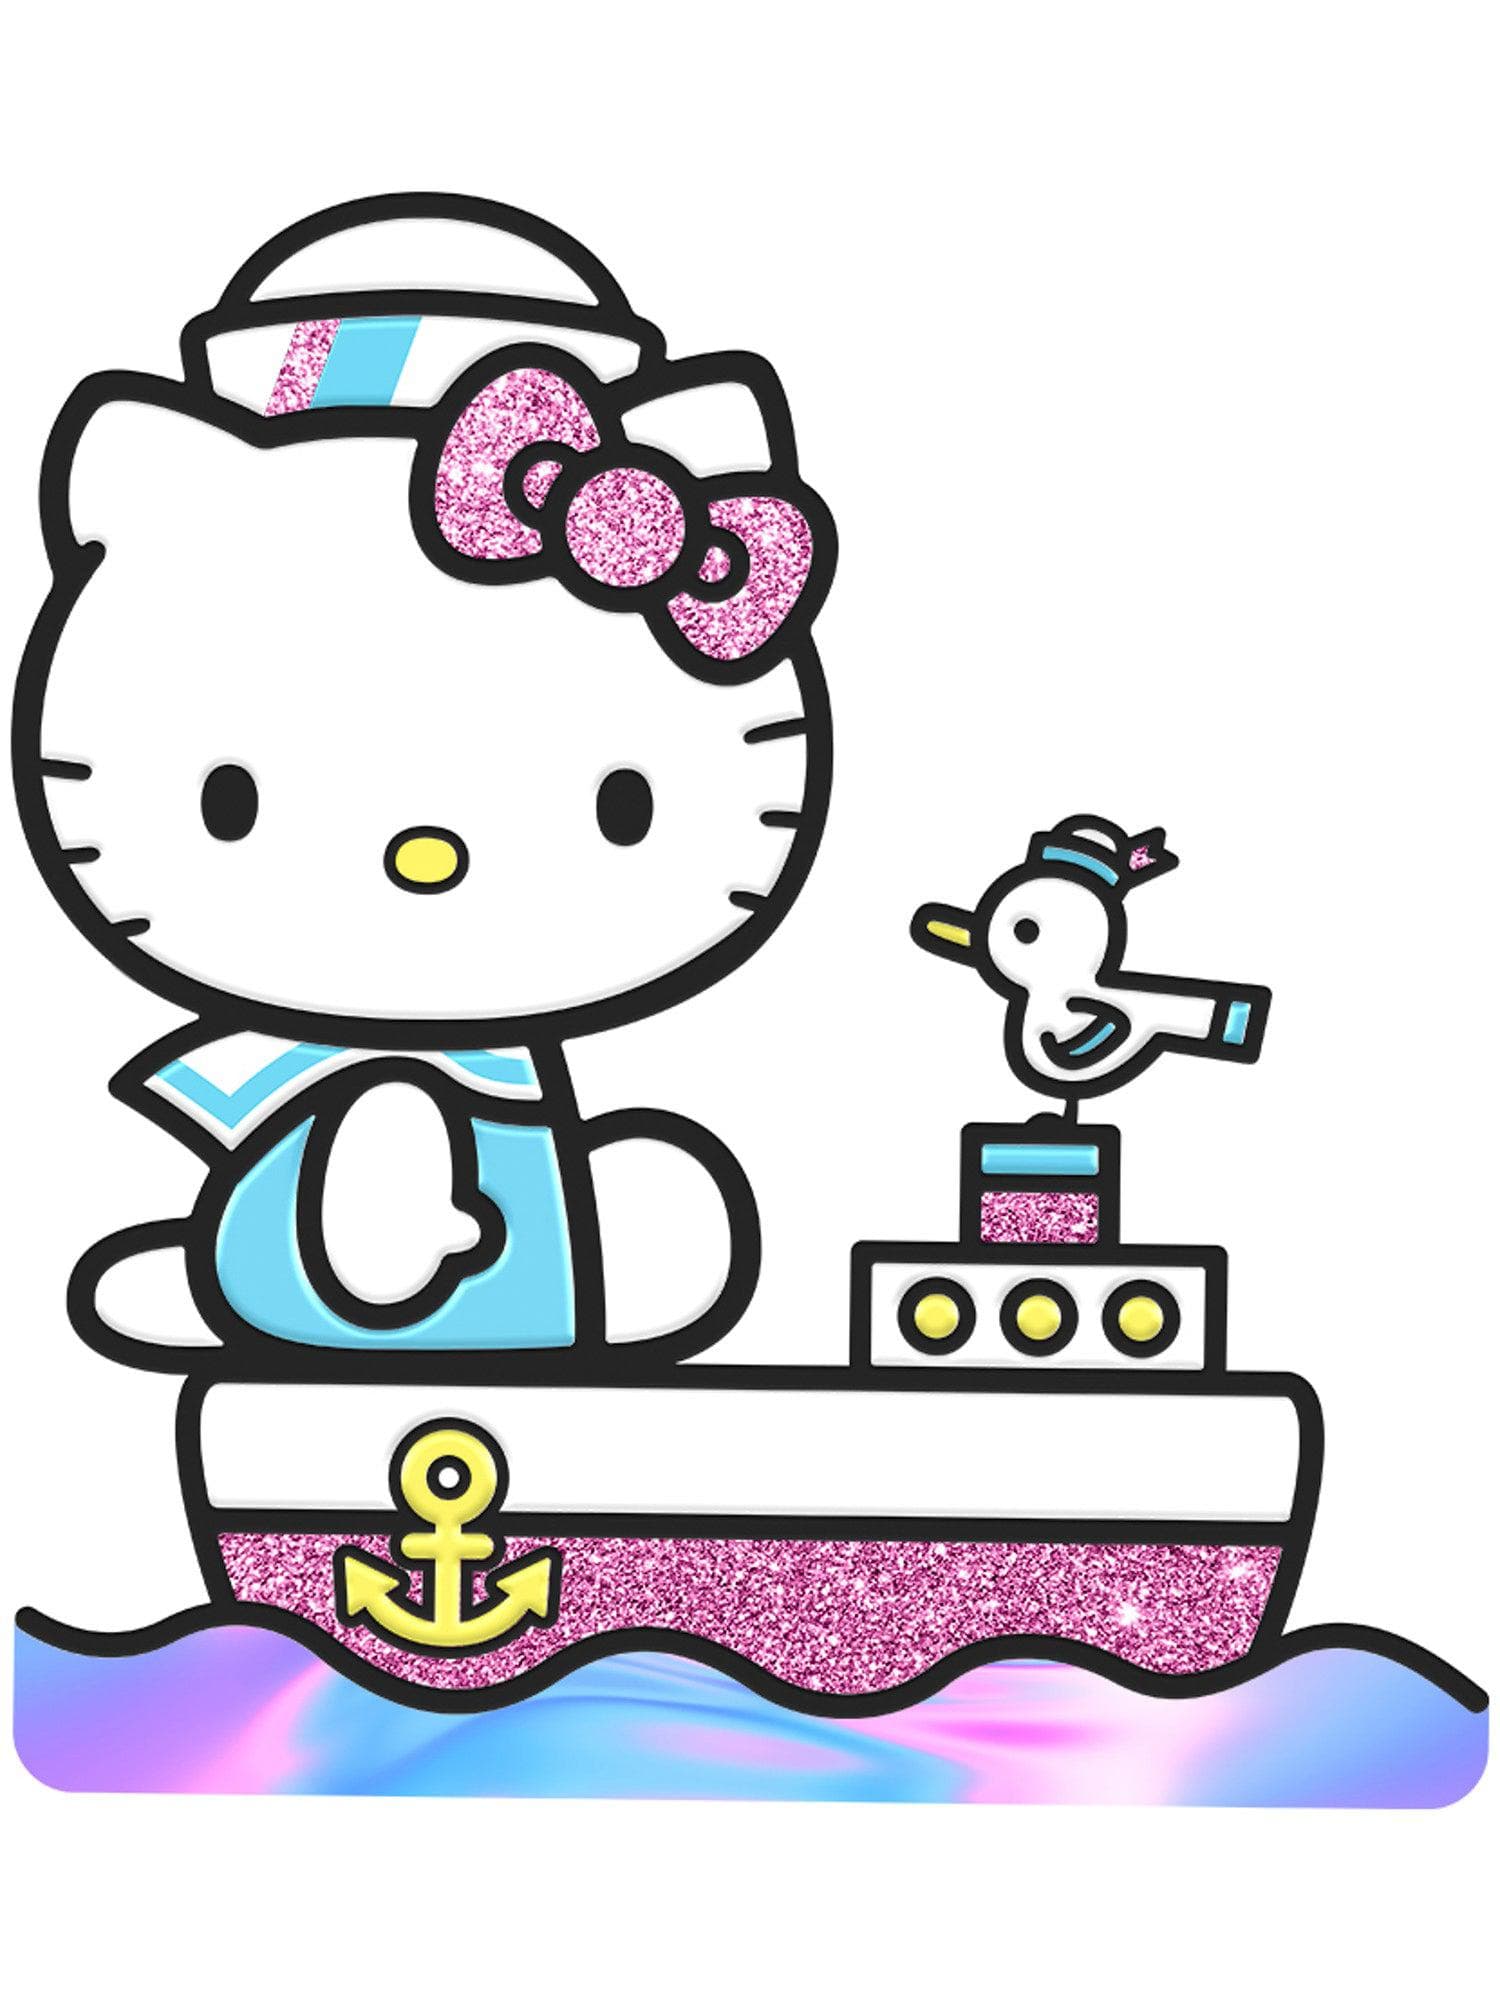 Kidrobot - Hello Kitty Lanyard and Pin Set - costumes.com